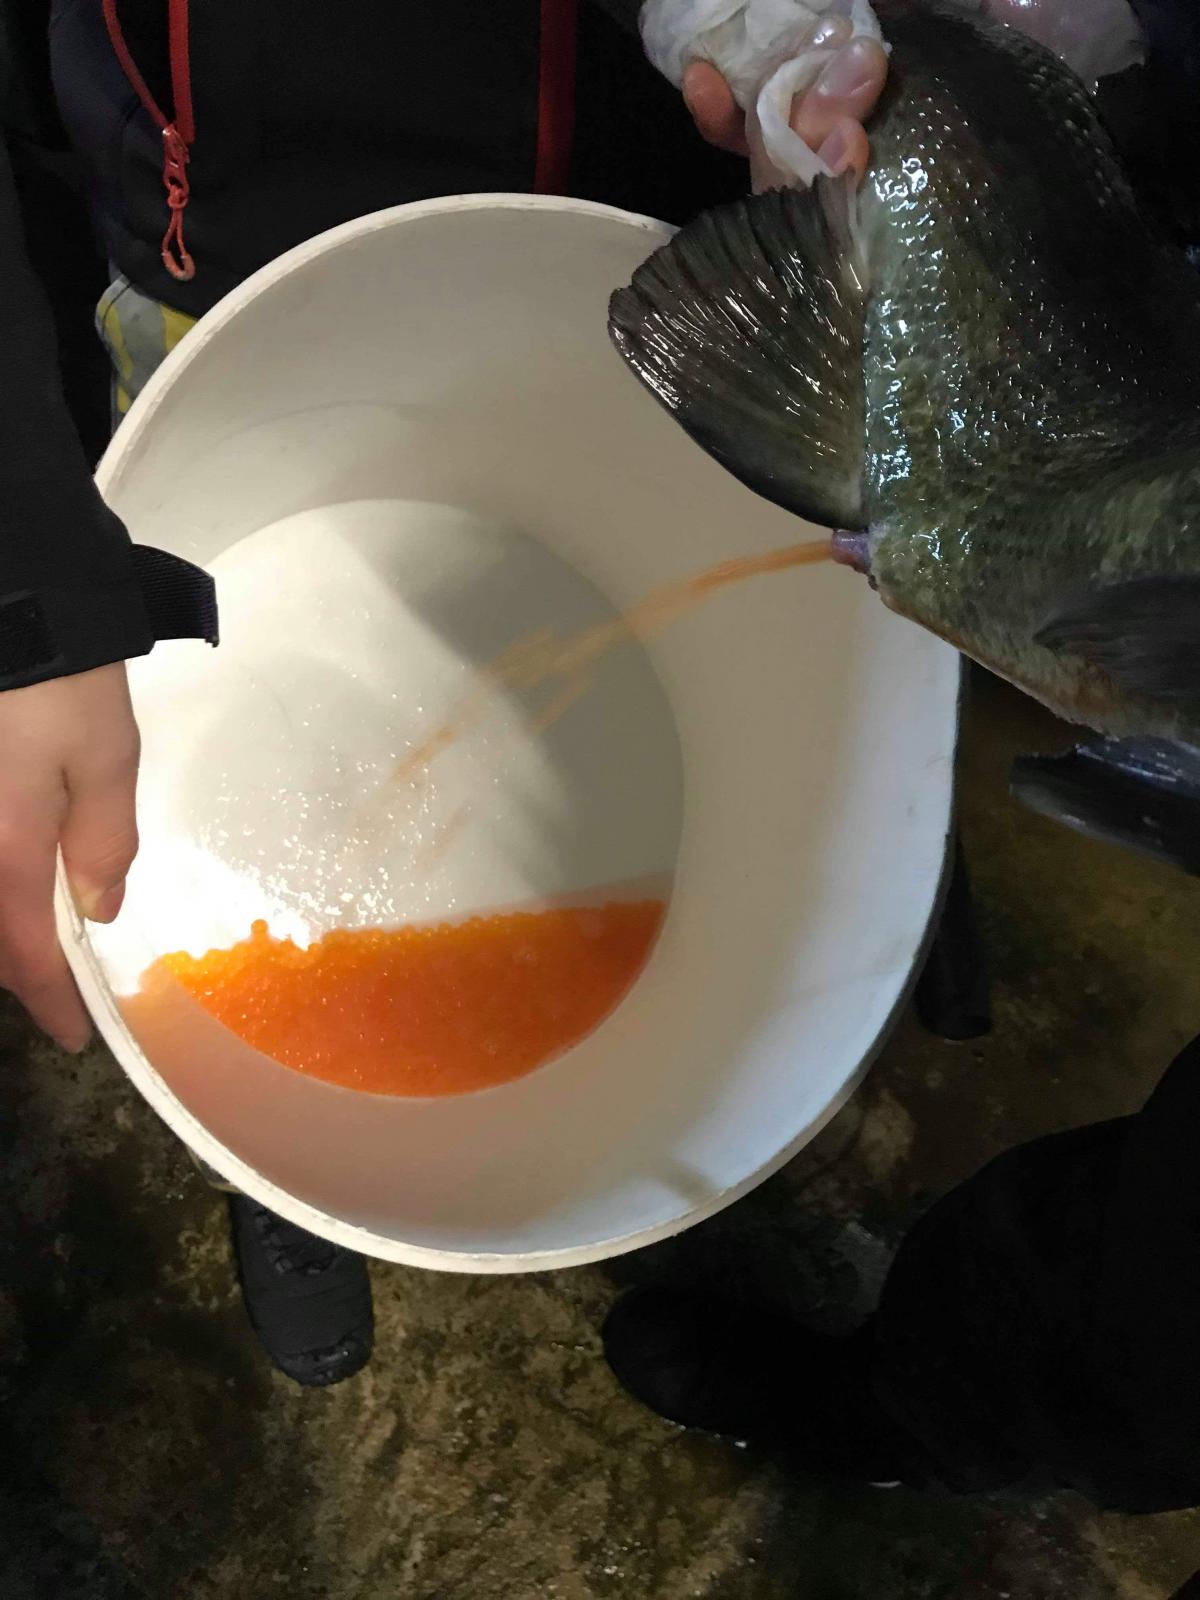 Stripping eggs off a 12lb hen salmon